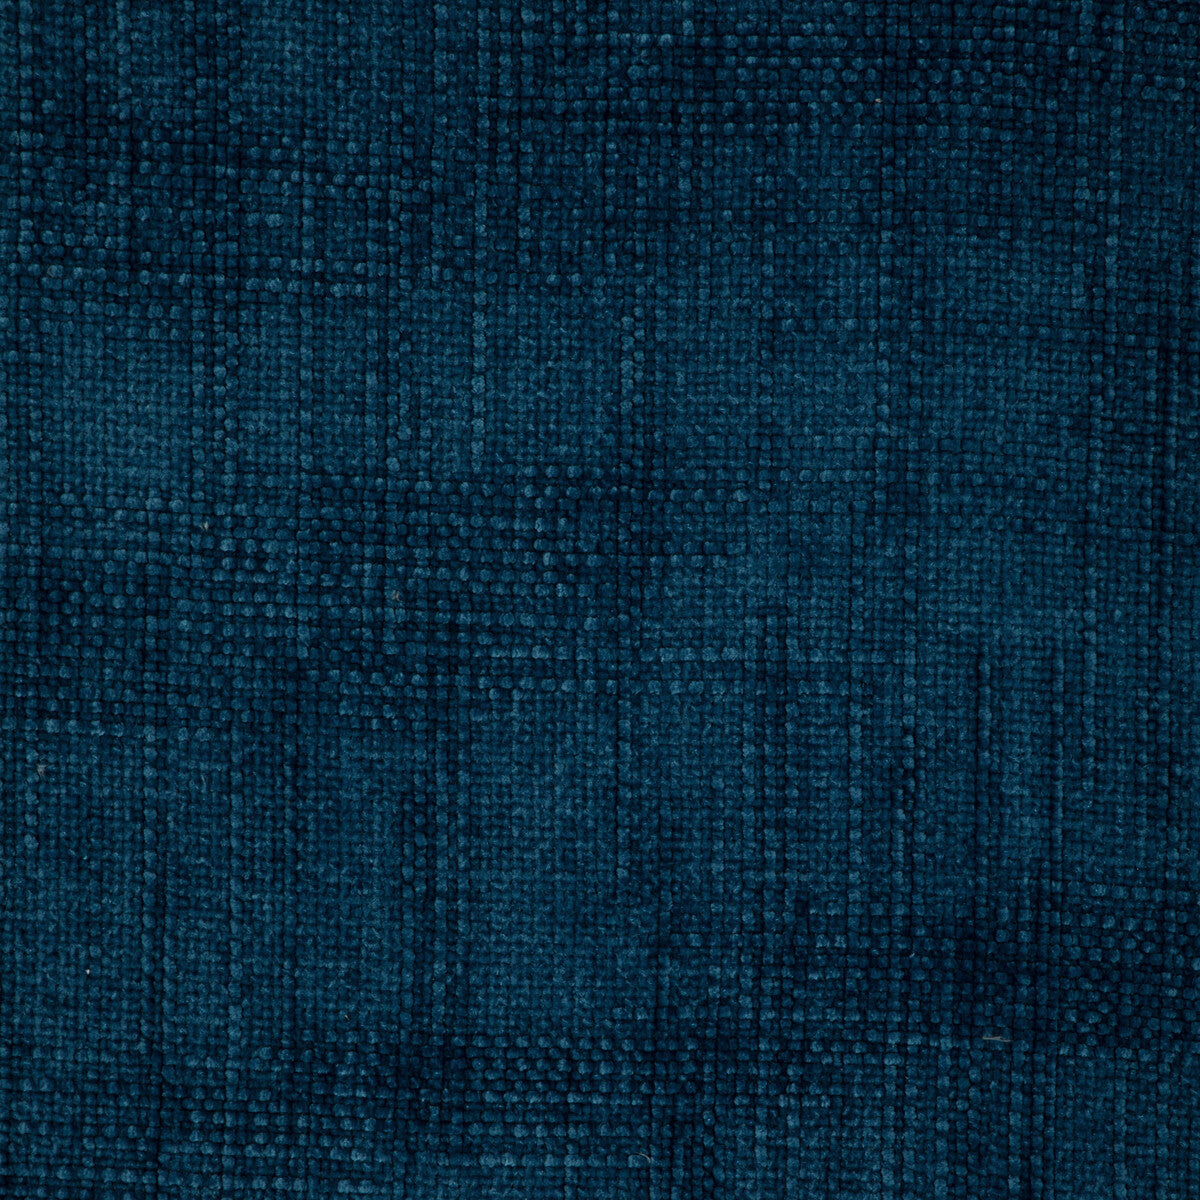 Kravet Smart fabric in 36991-5 color - pattern 36991.5.0 - by Kravet Smart in the Performance Kravetarmor collection